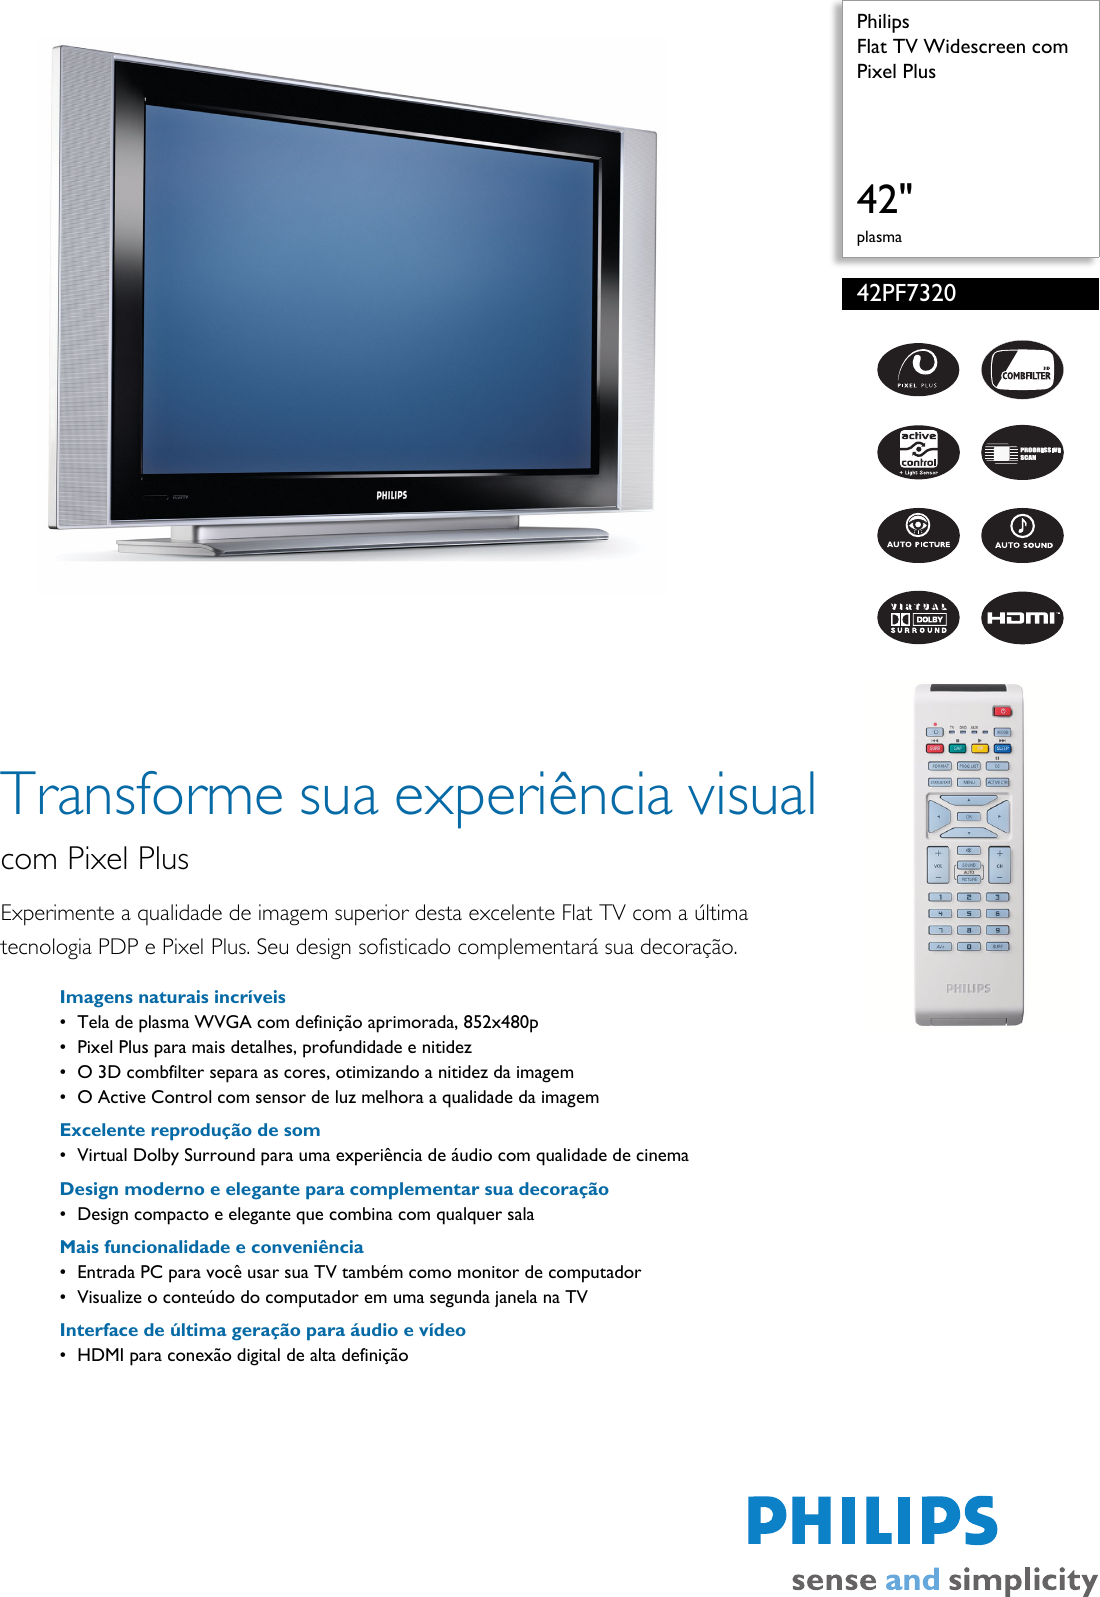 Page 1 of 3 - Philips 42PF7320/78 Flat TV Widescreen Com Pixel Plus User Manual Folheto 42pf7320 78 Pss Brpbr